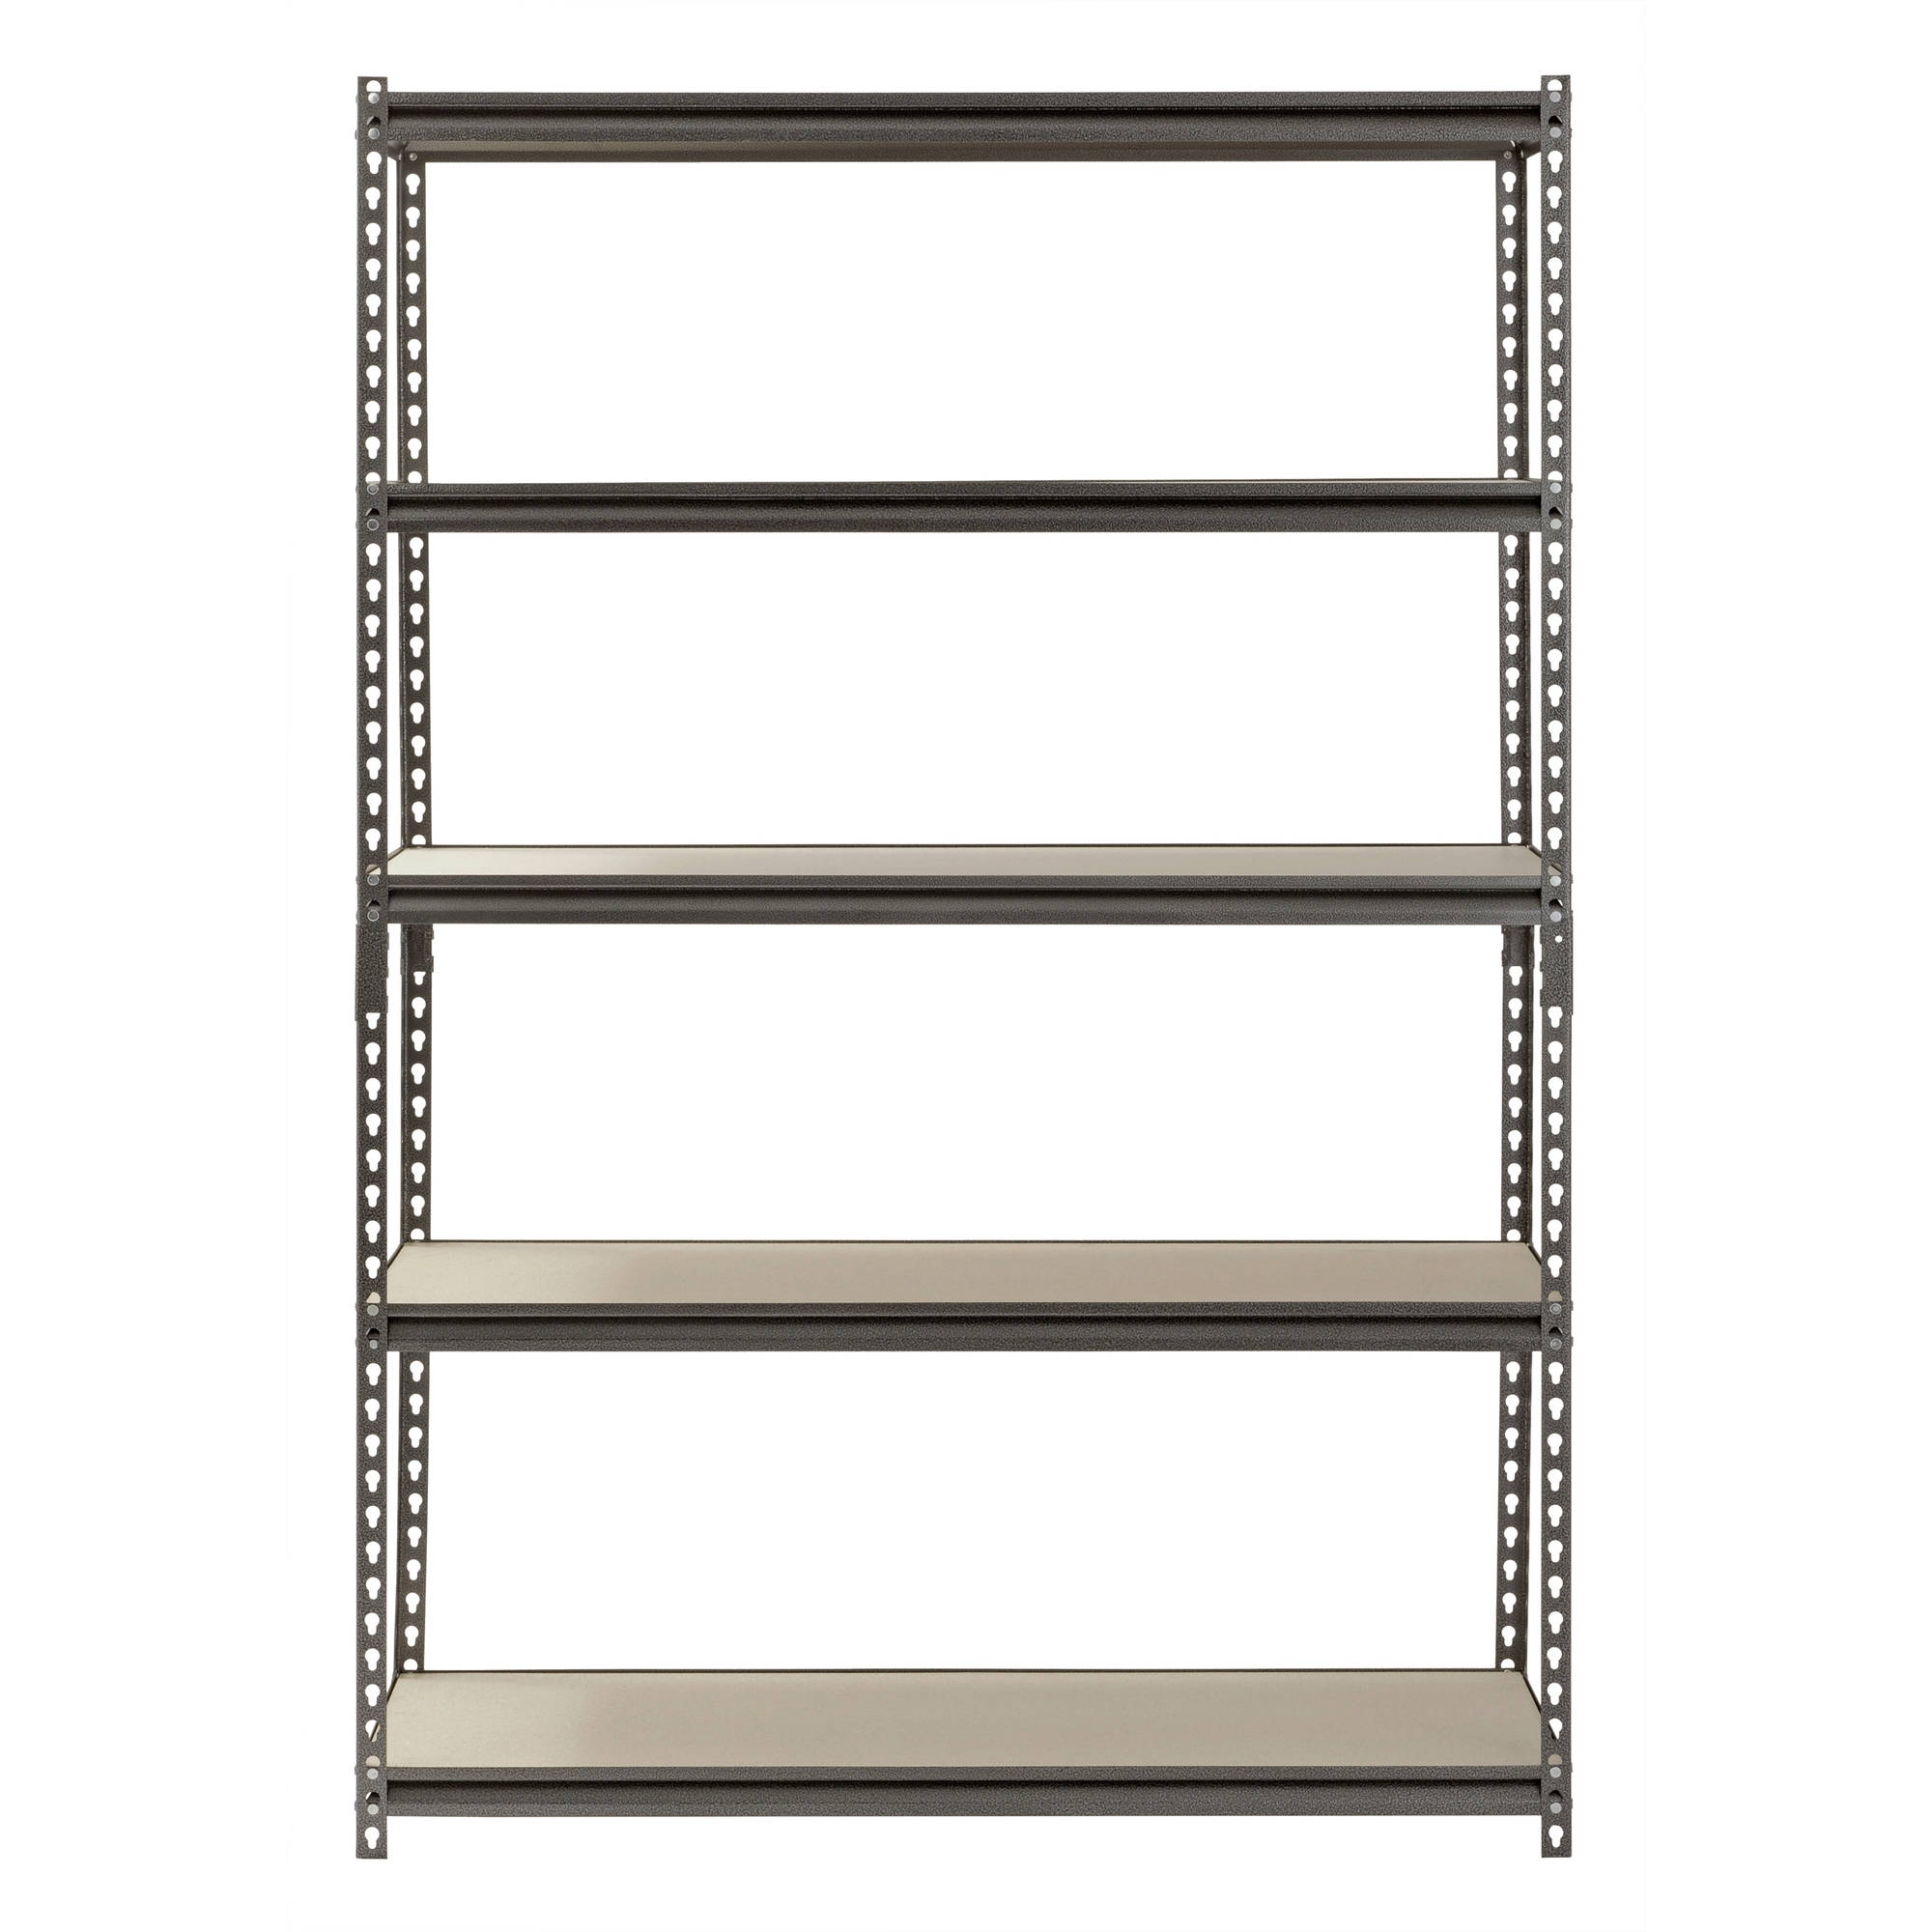 Muscle Rack 48"W x 18"D x 72"H 5-Shelf Steel Freestanding Shelves, Silver - image 3 of 7